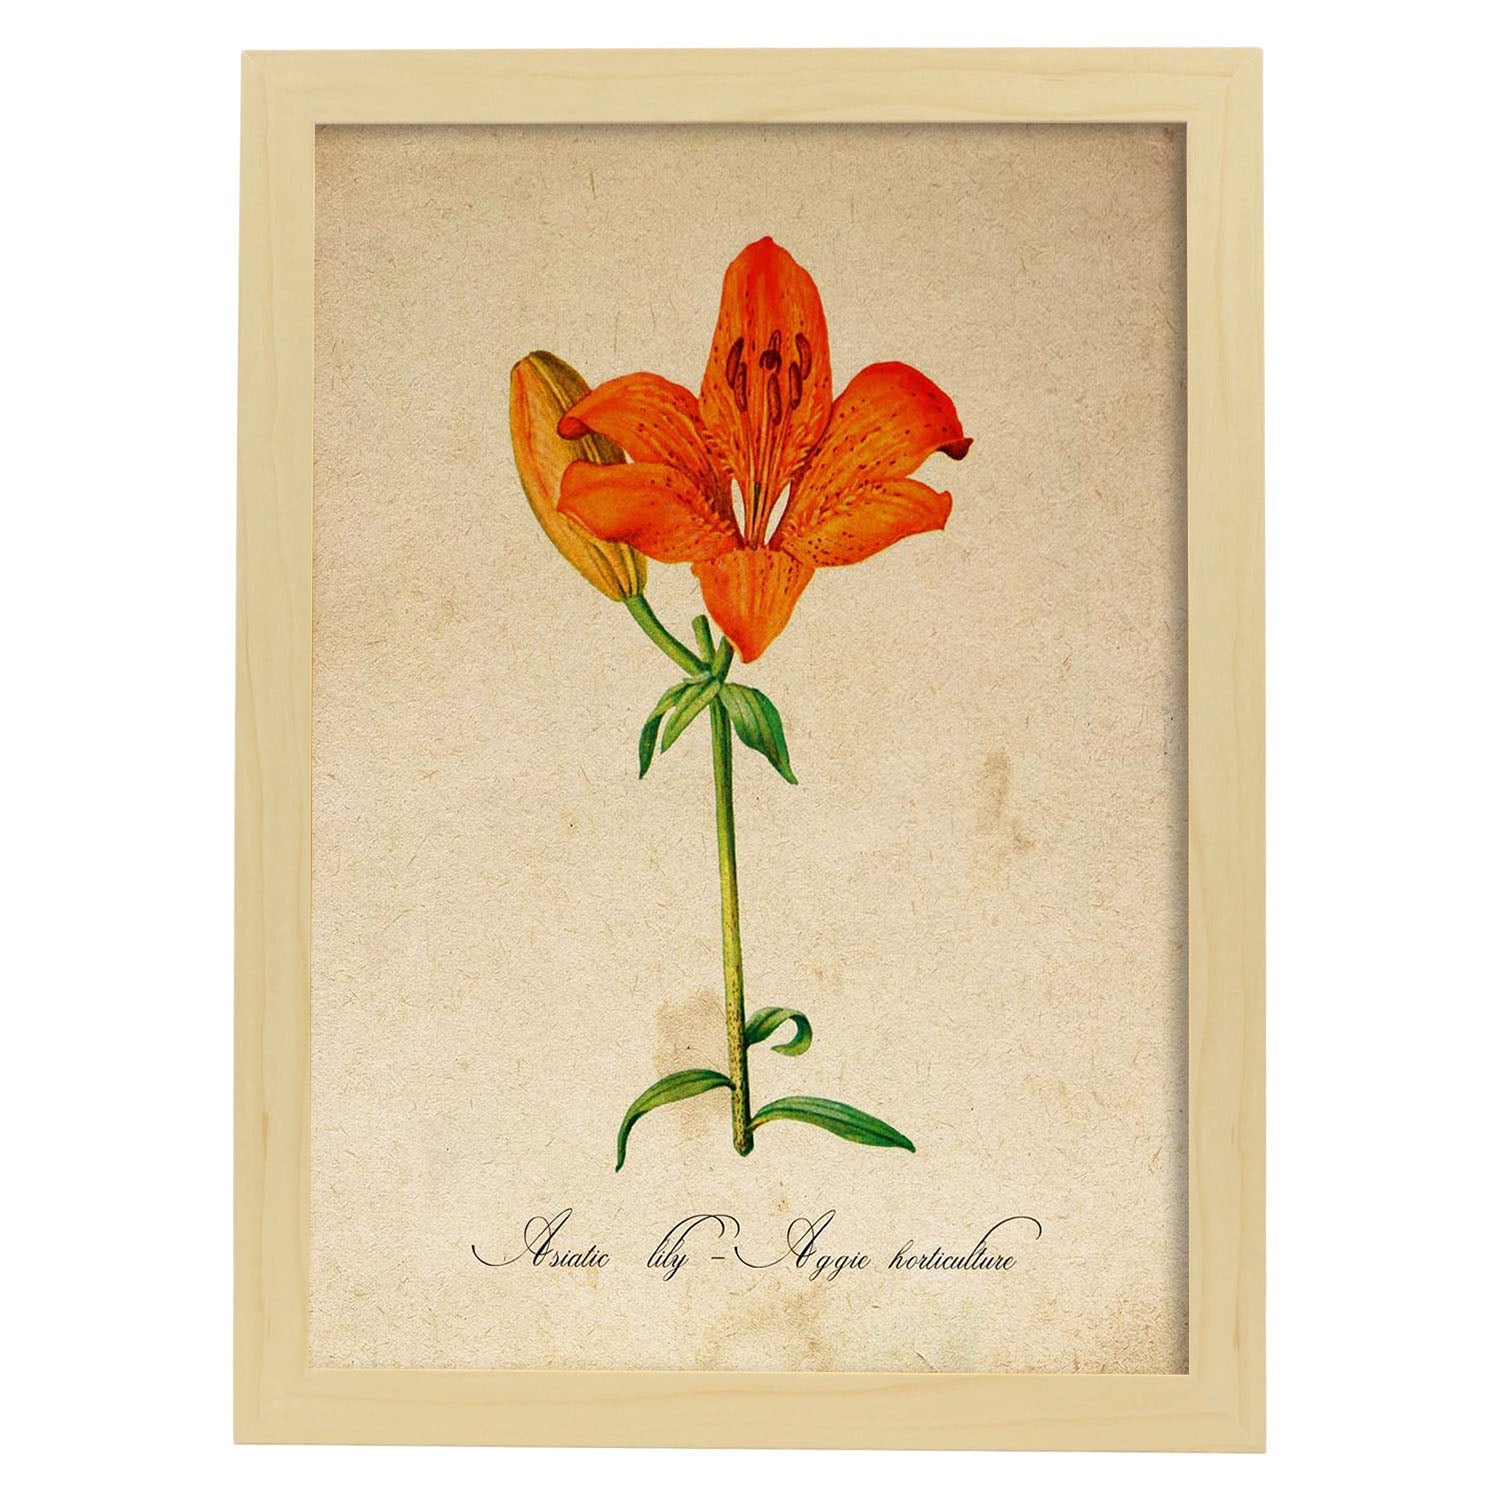 Poster de flores vintage. Lámina Asiatic Lily - Aggie Horticulture con diseño vintage.-Artwork-Nacnic-A3-Marco Madera clara-Nacnic Estudio SL